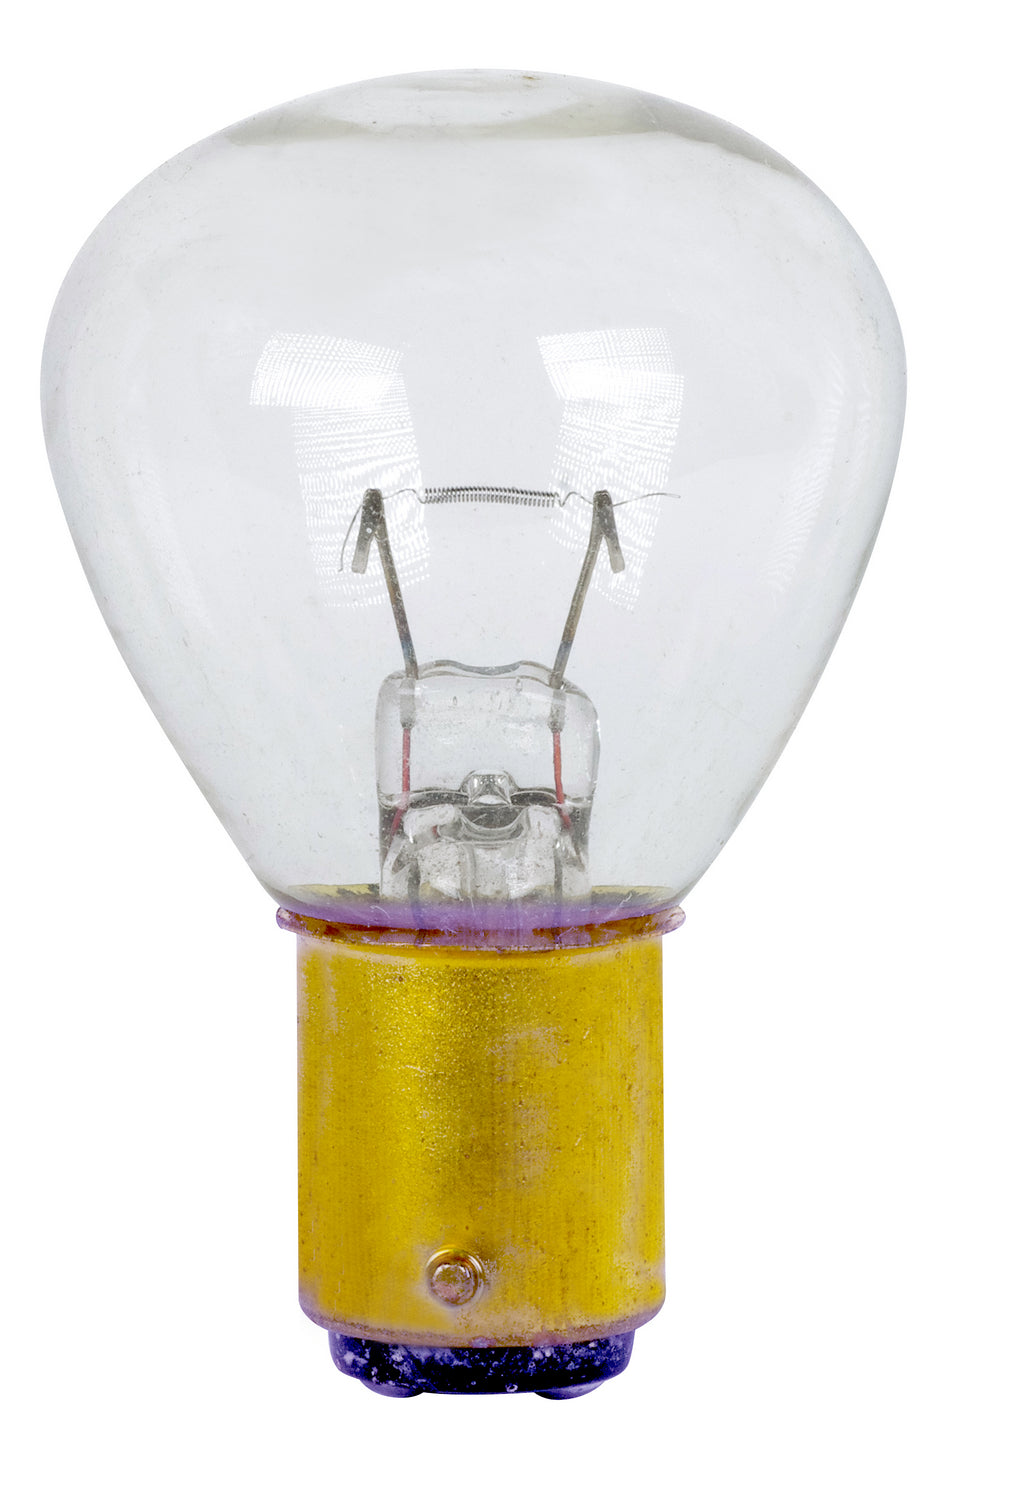 Satco - S7044 - Light Bulb